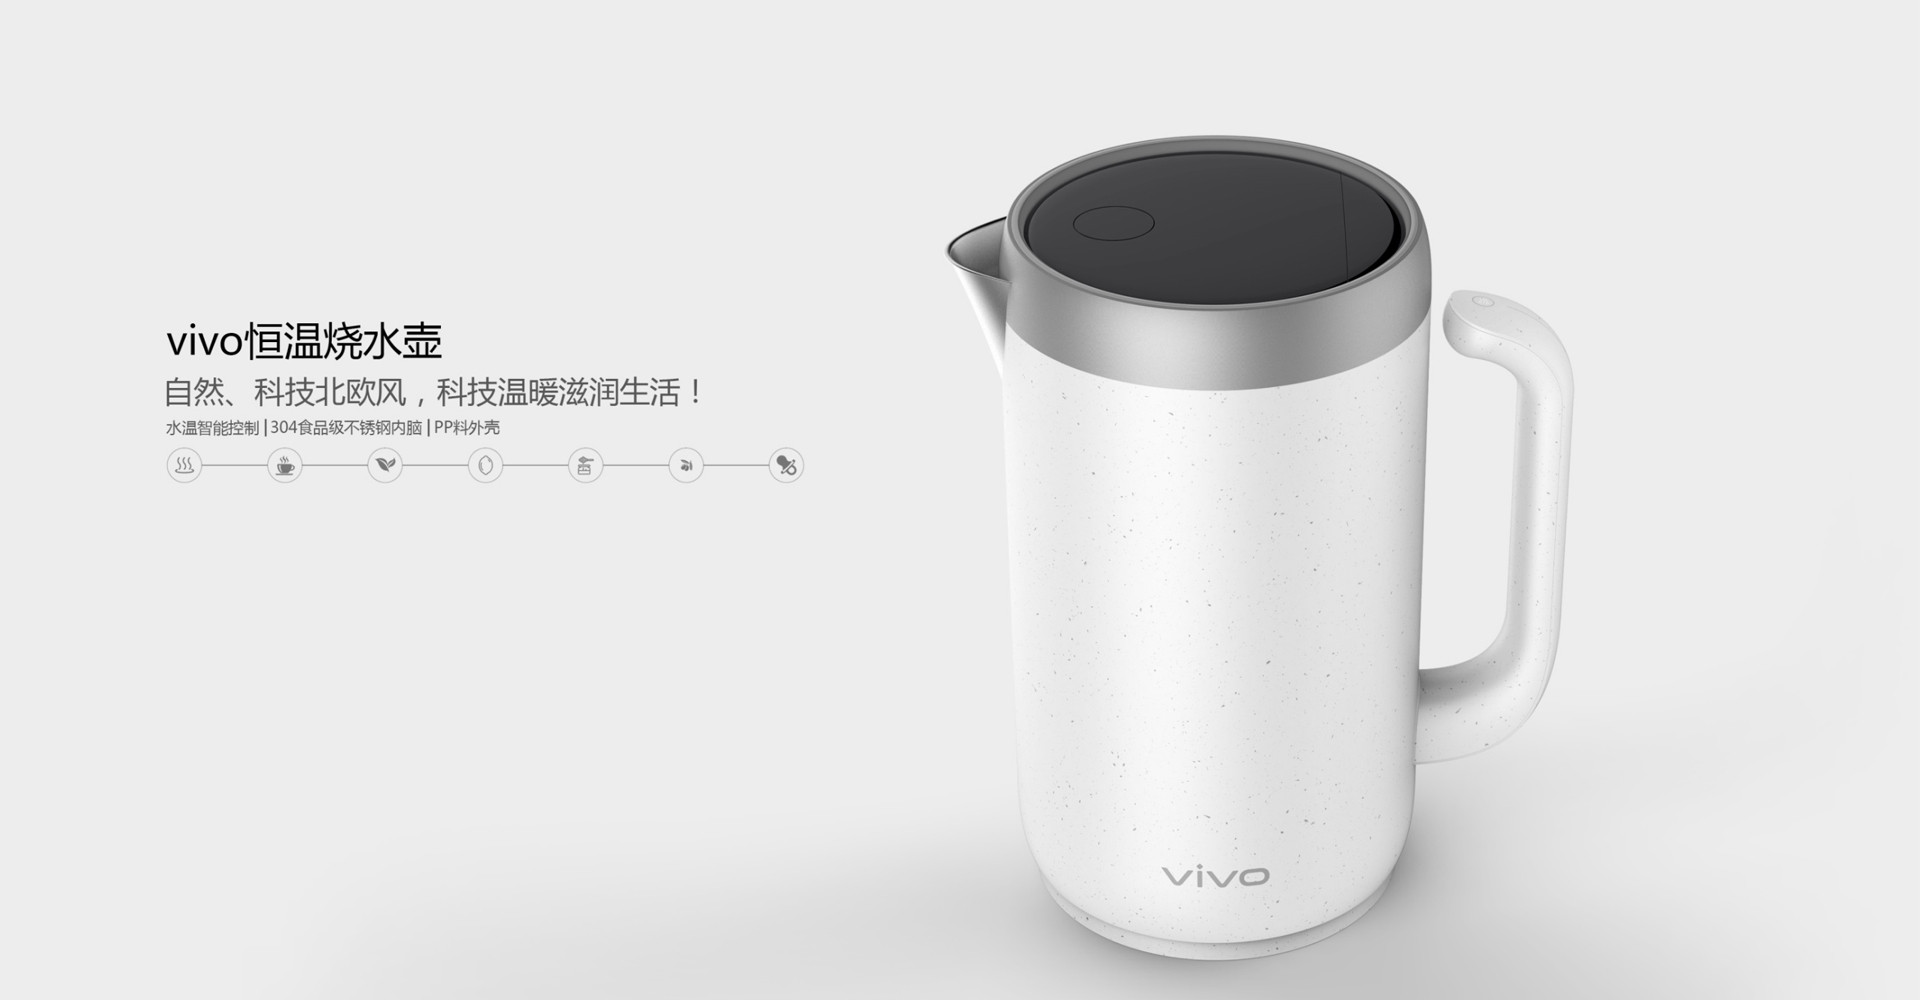 VIVO Thermostatic Pot Design (3)1am